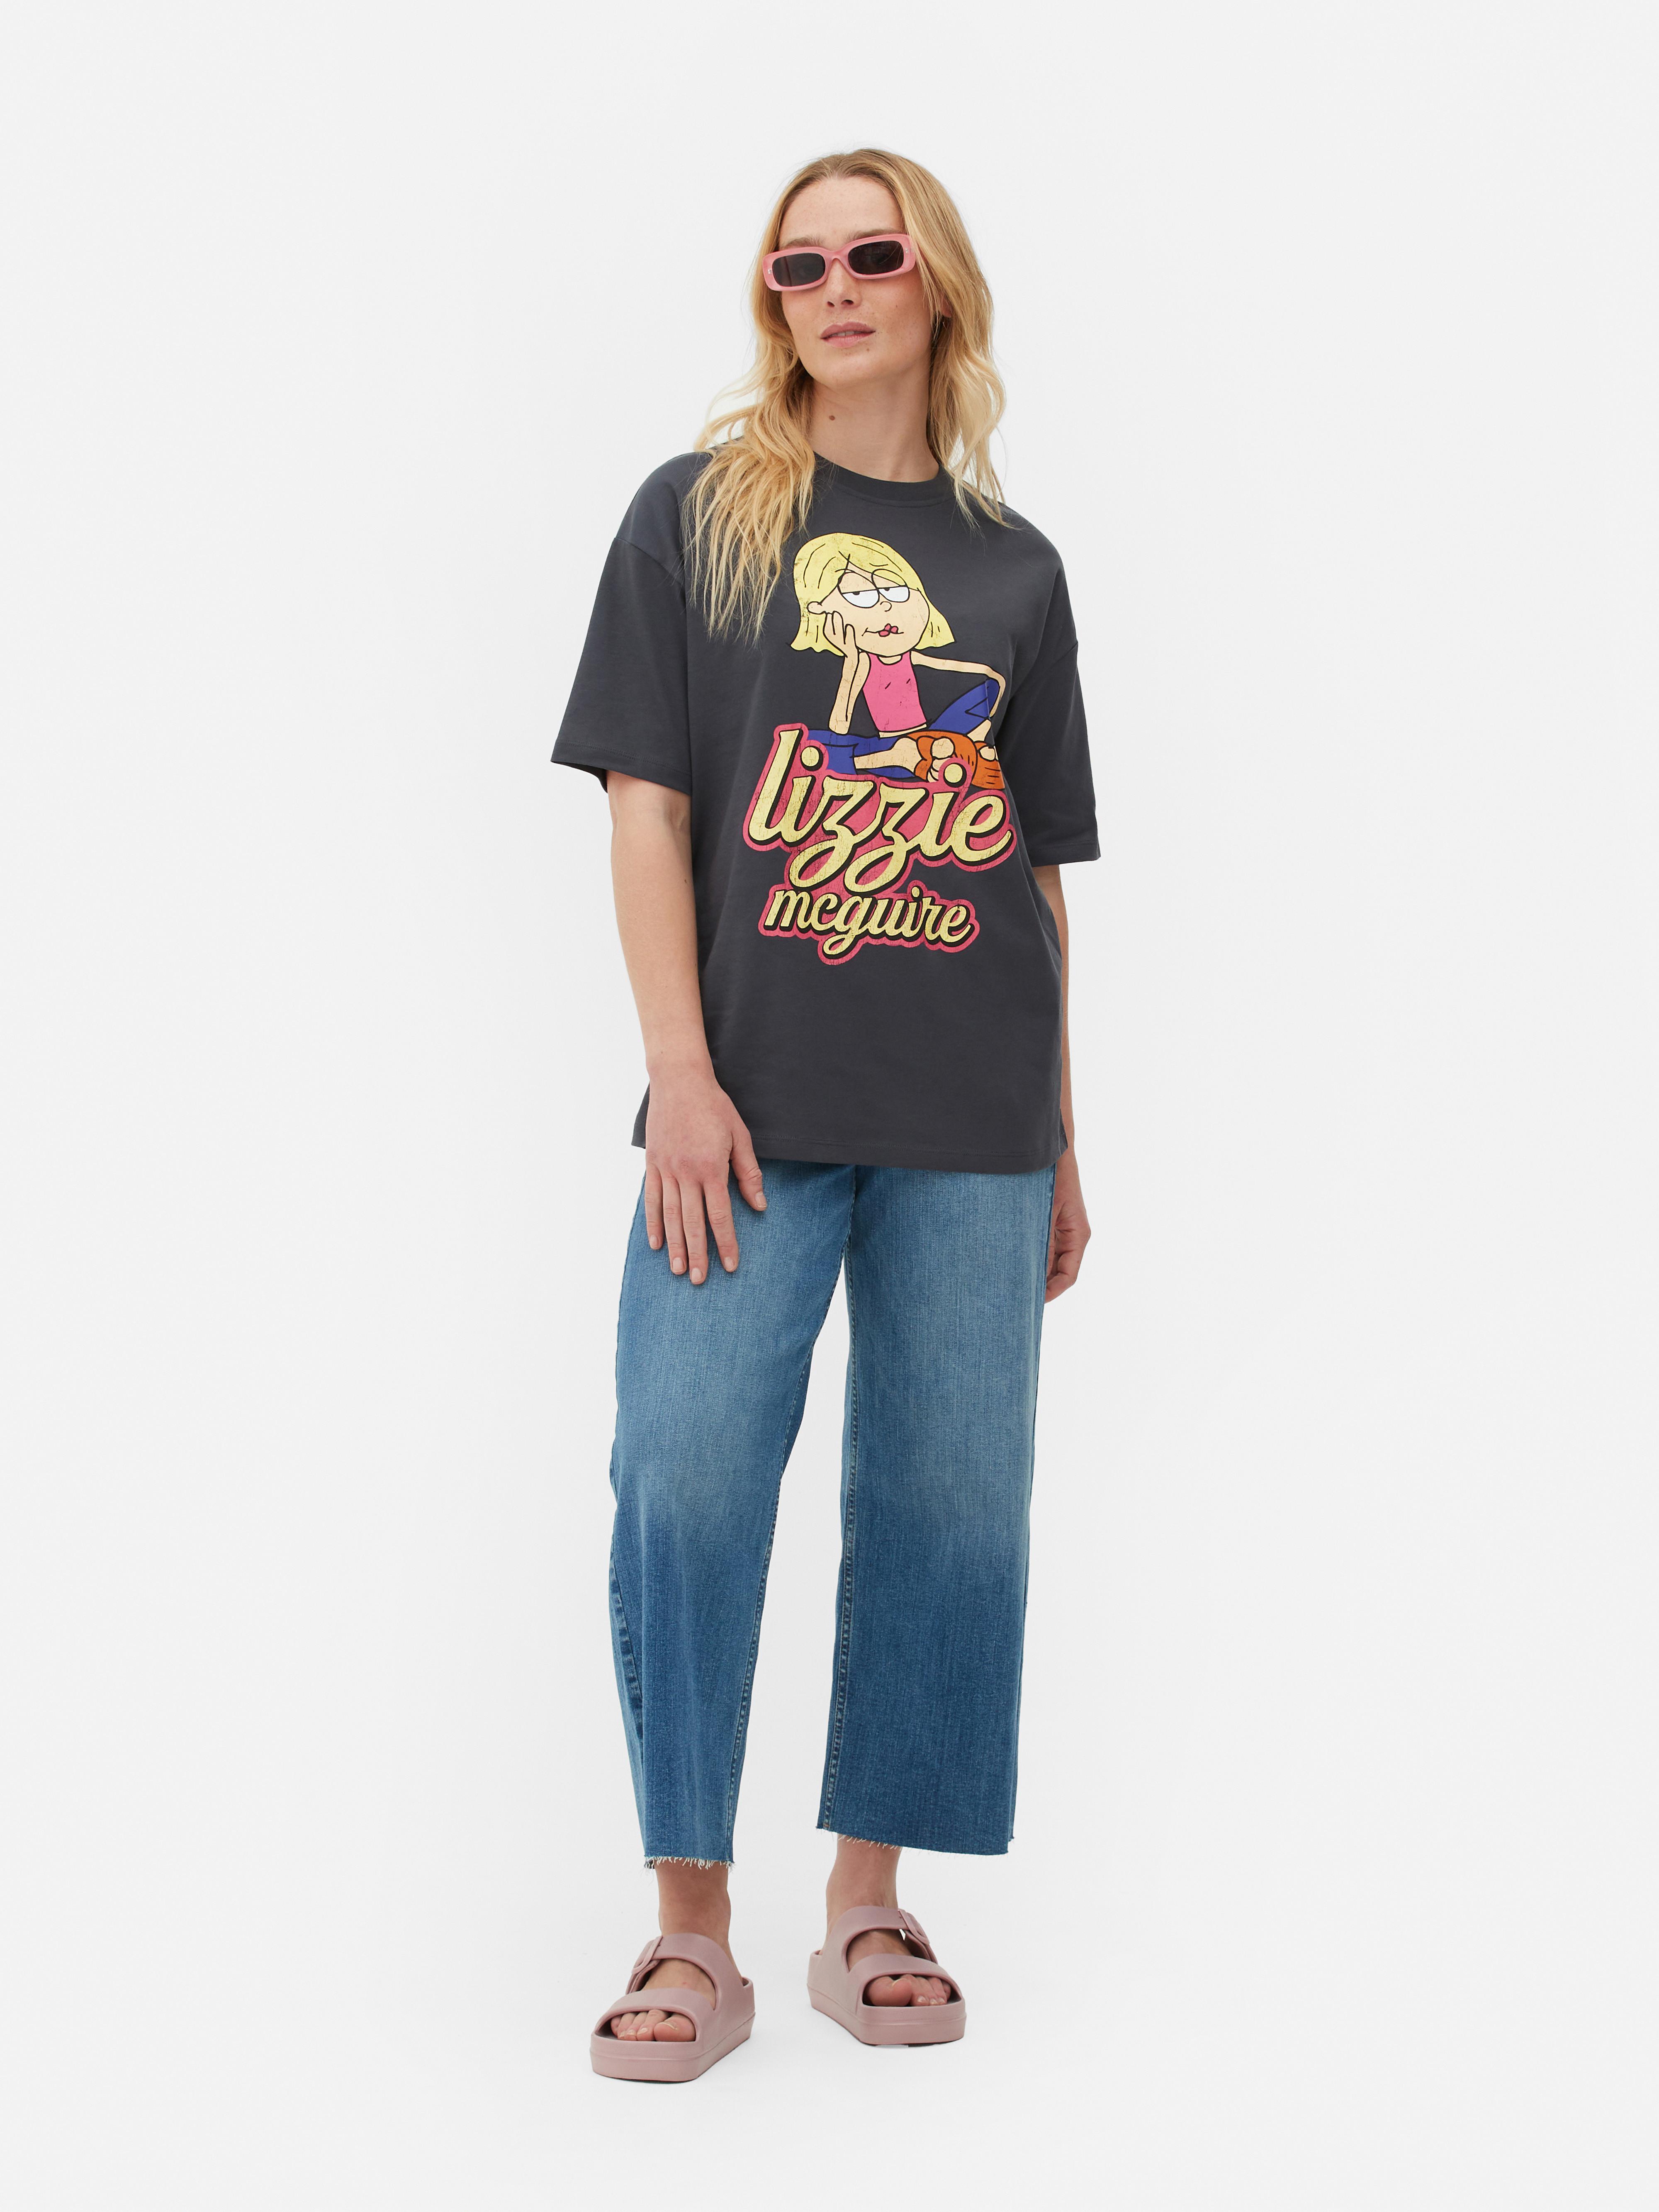 Disney’s Lizzie McGuire T-shirt